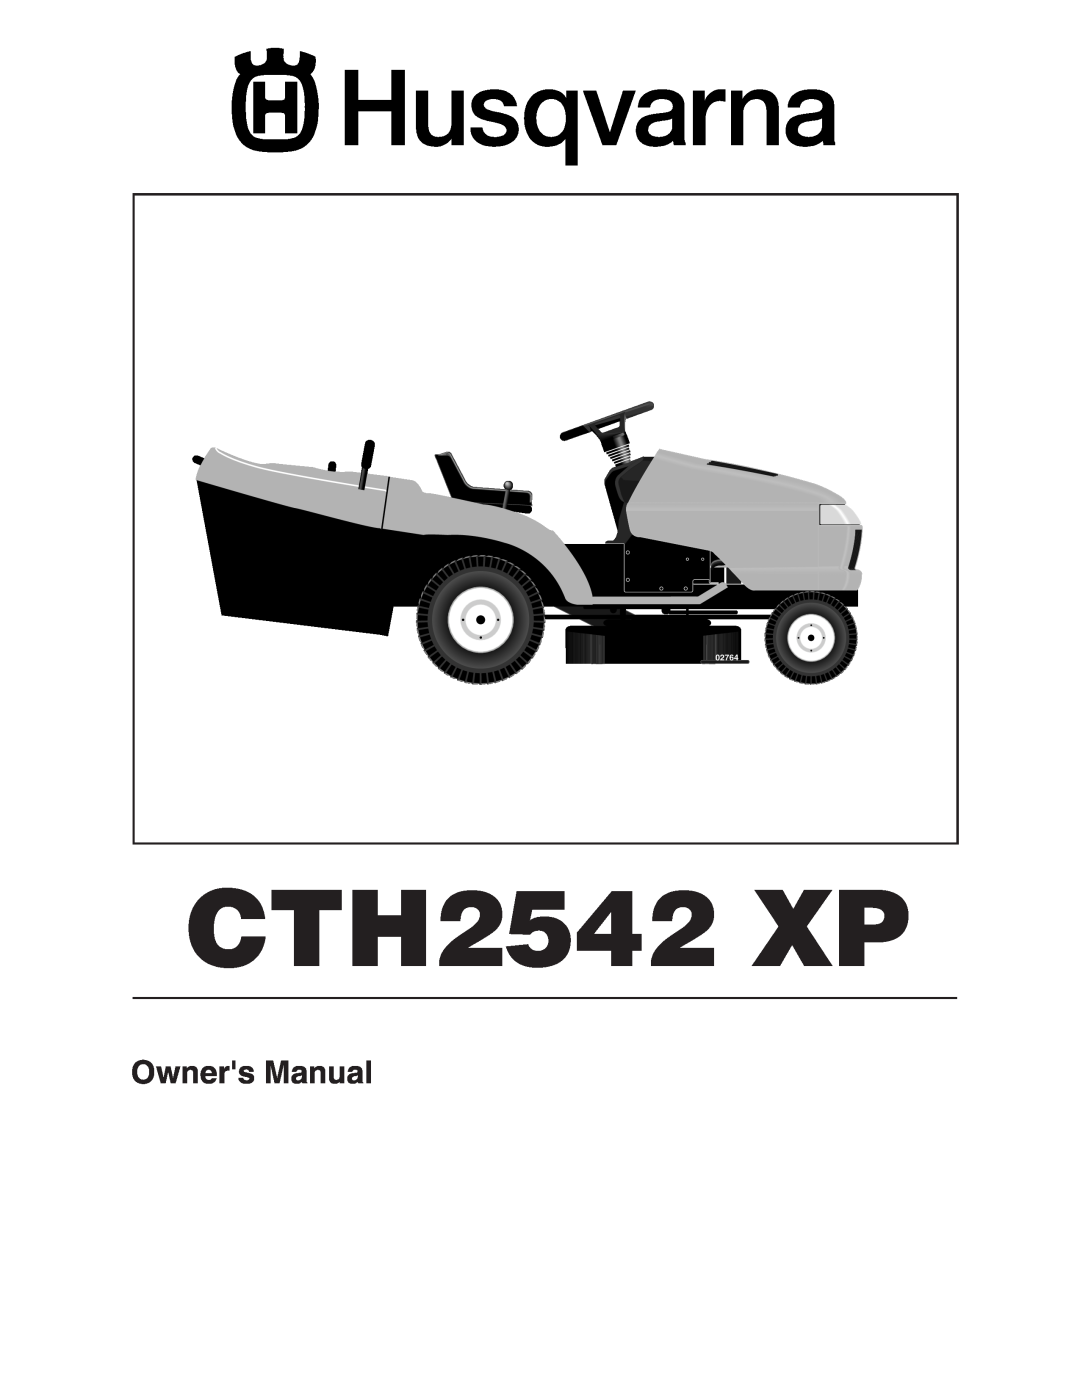 Husqvarna CTH2542 XP owner manual 02764 